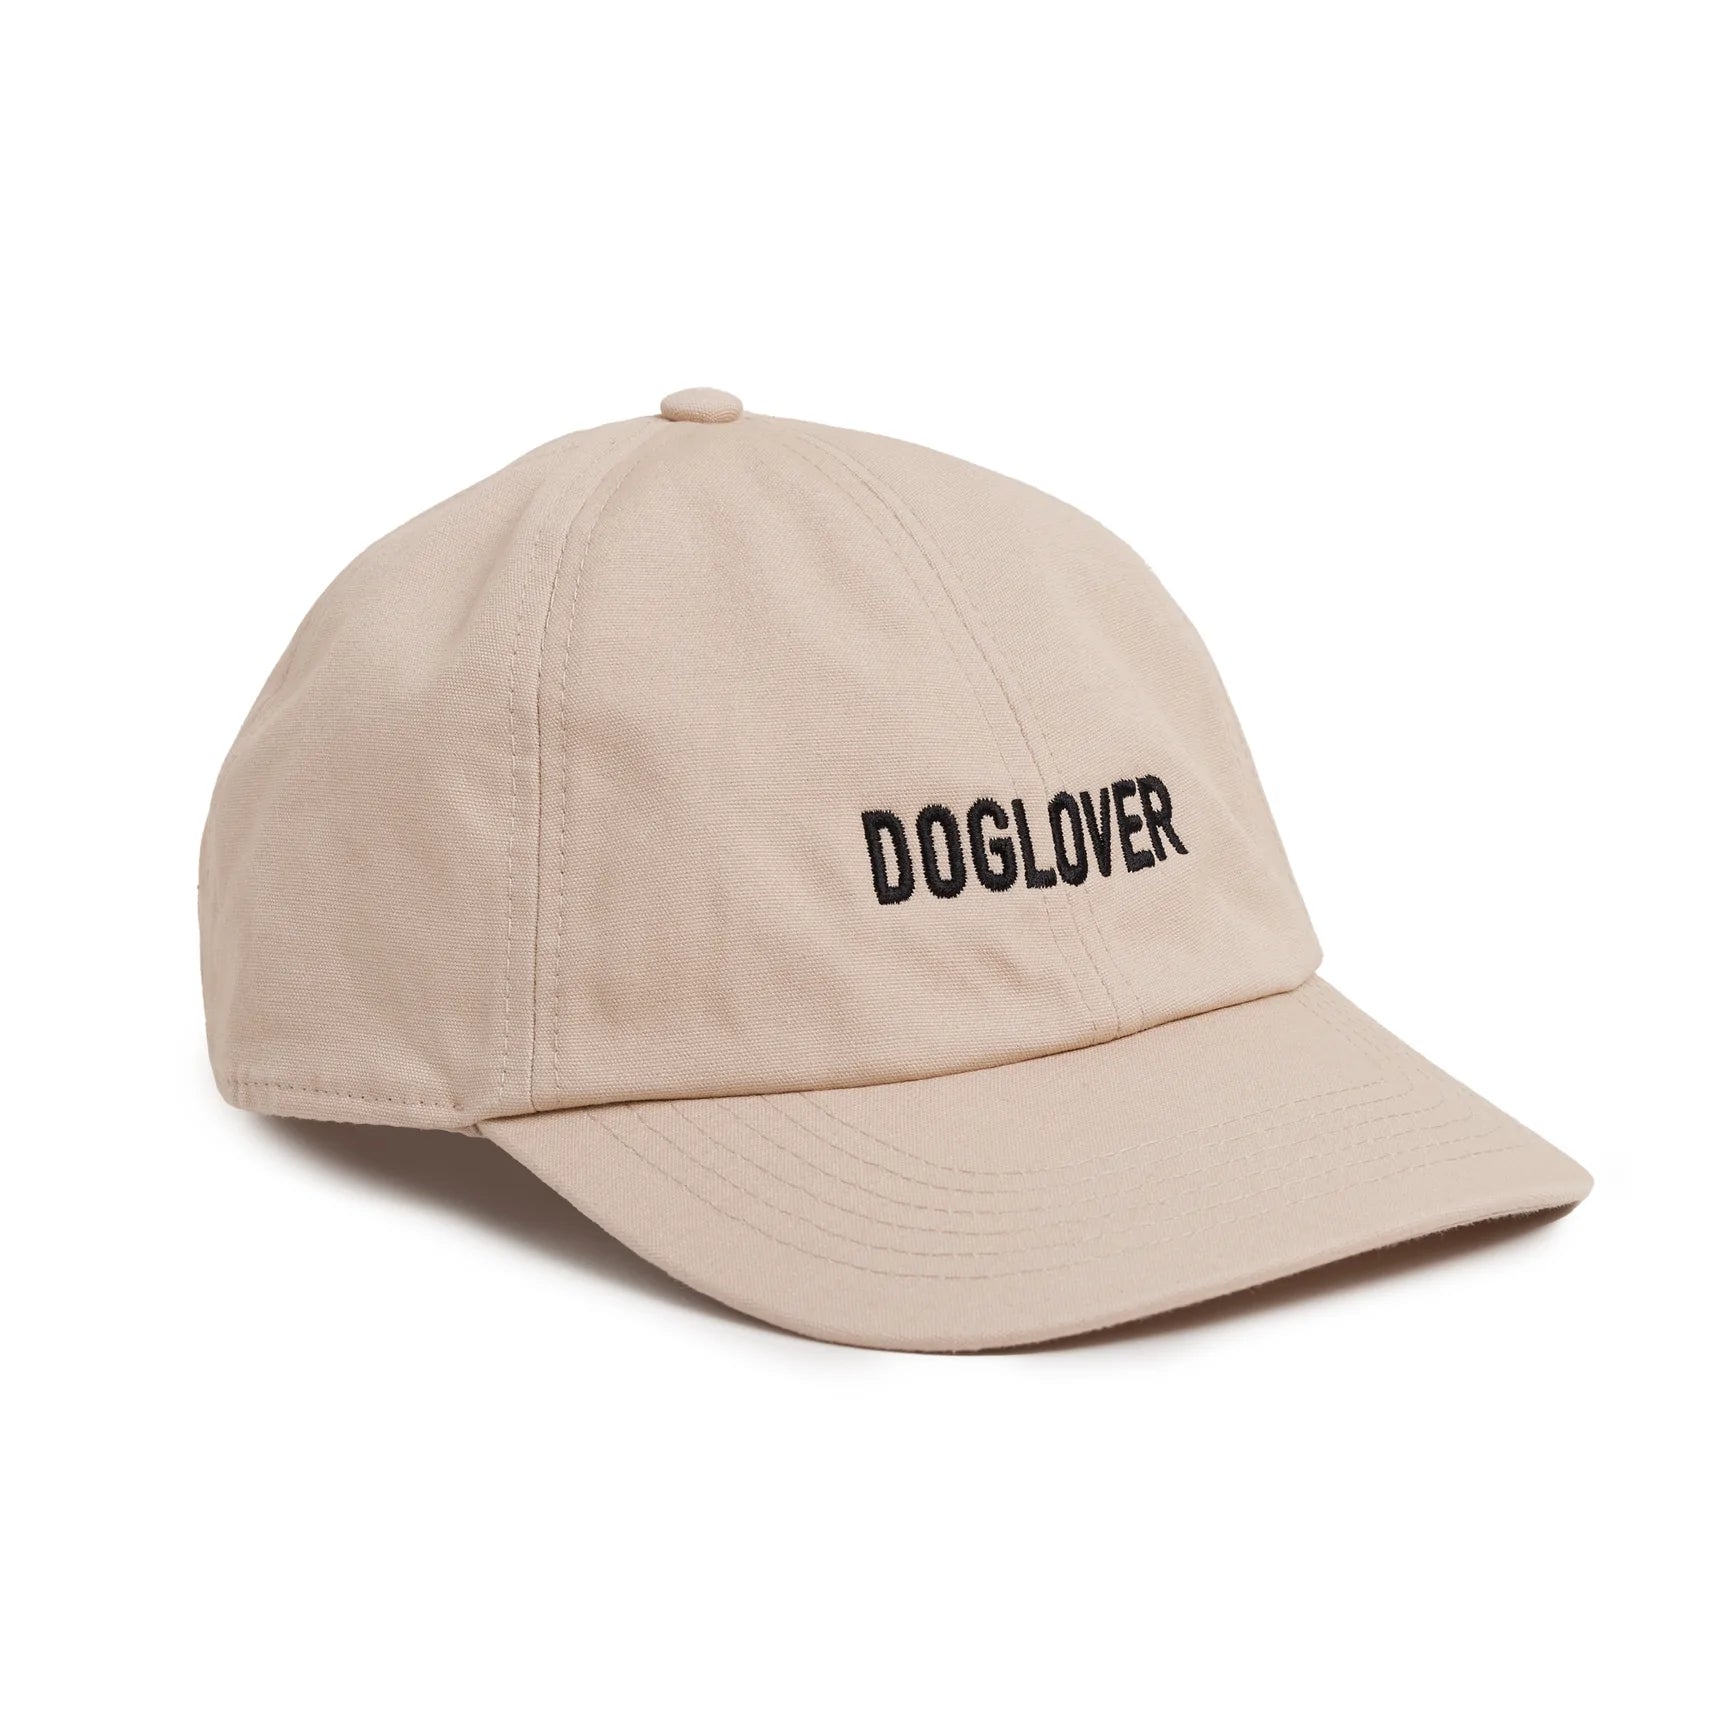 DOGLOVER cap